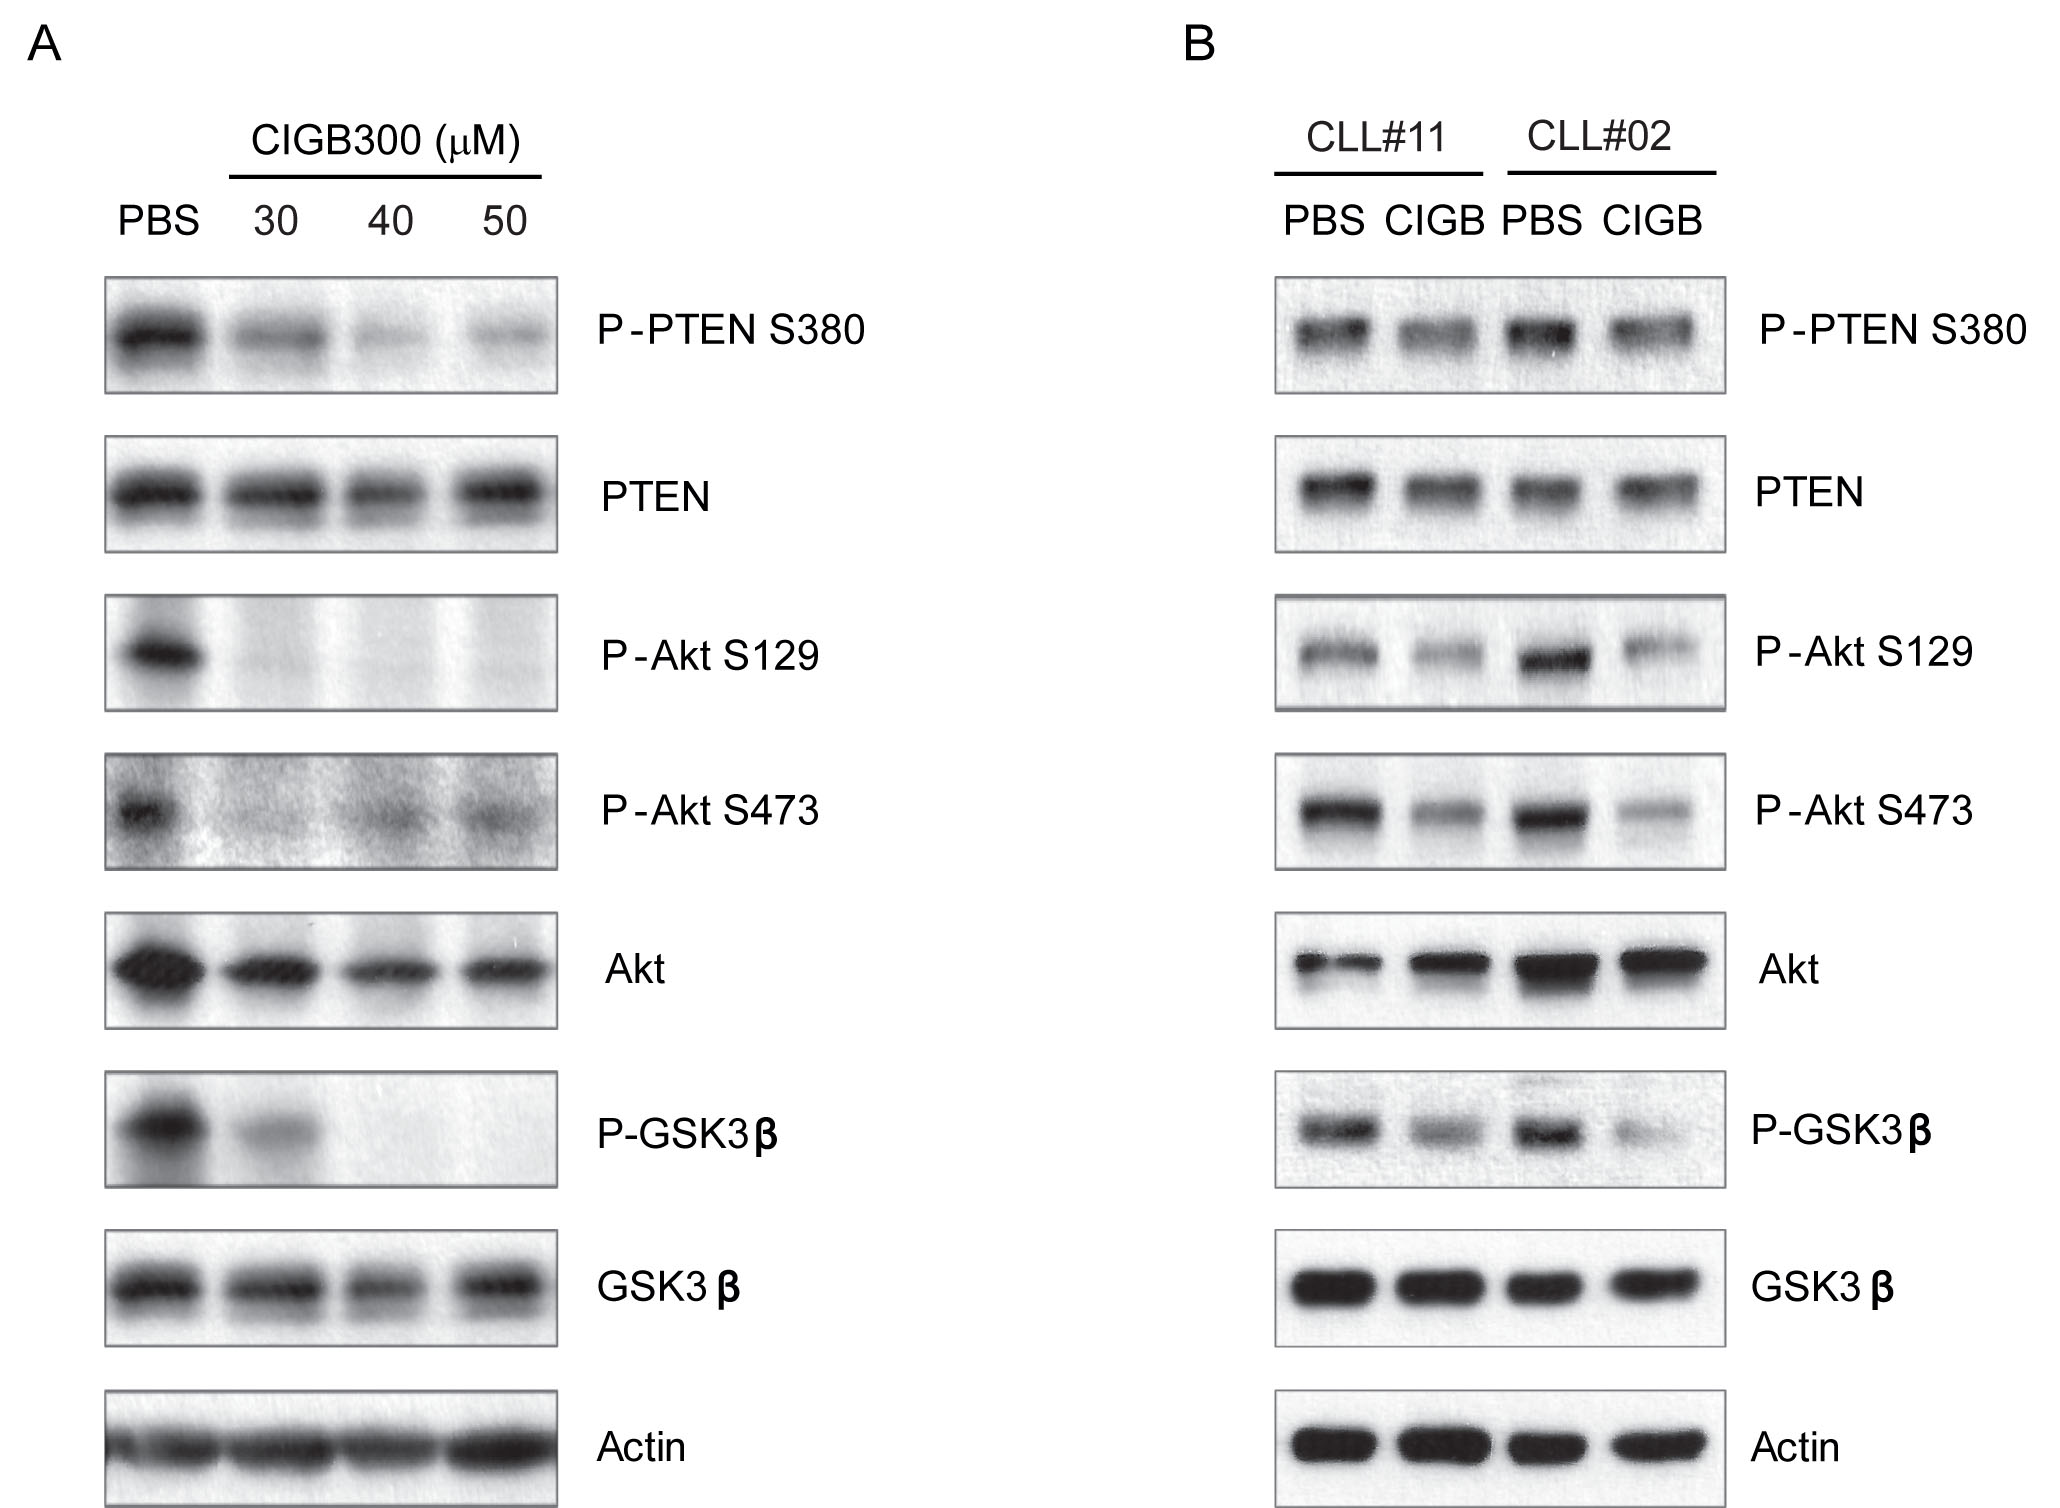 CIGB-300 inhibits PI3K signaling pathway.